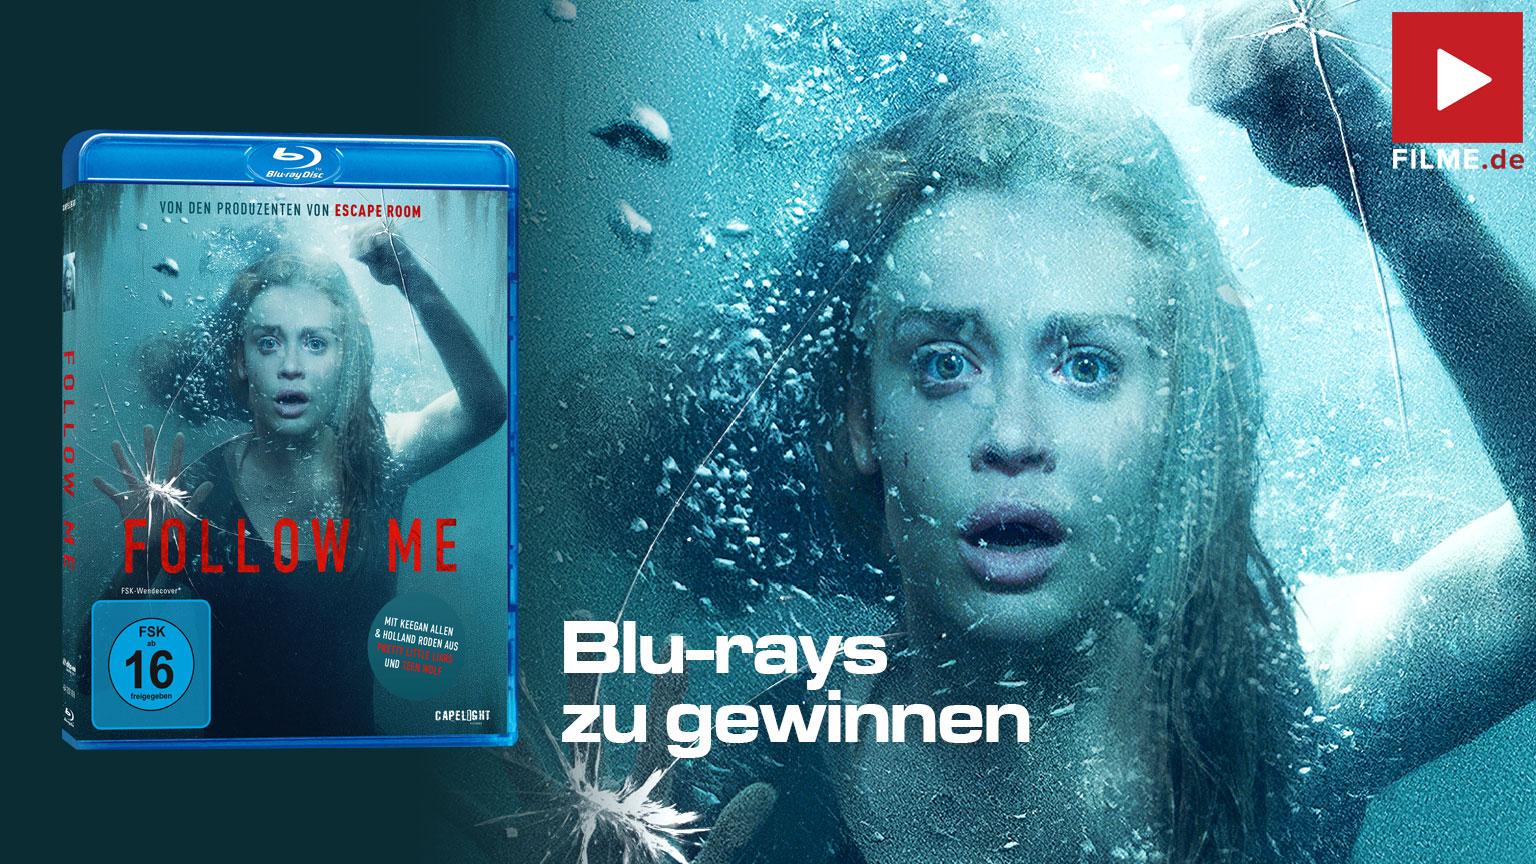 Follow Me Film 2020 Blu-ray DVD Gewinnspiel gewinnen shop kaufen Artikelbild